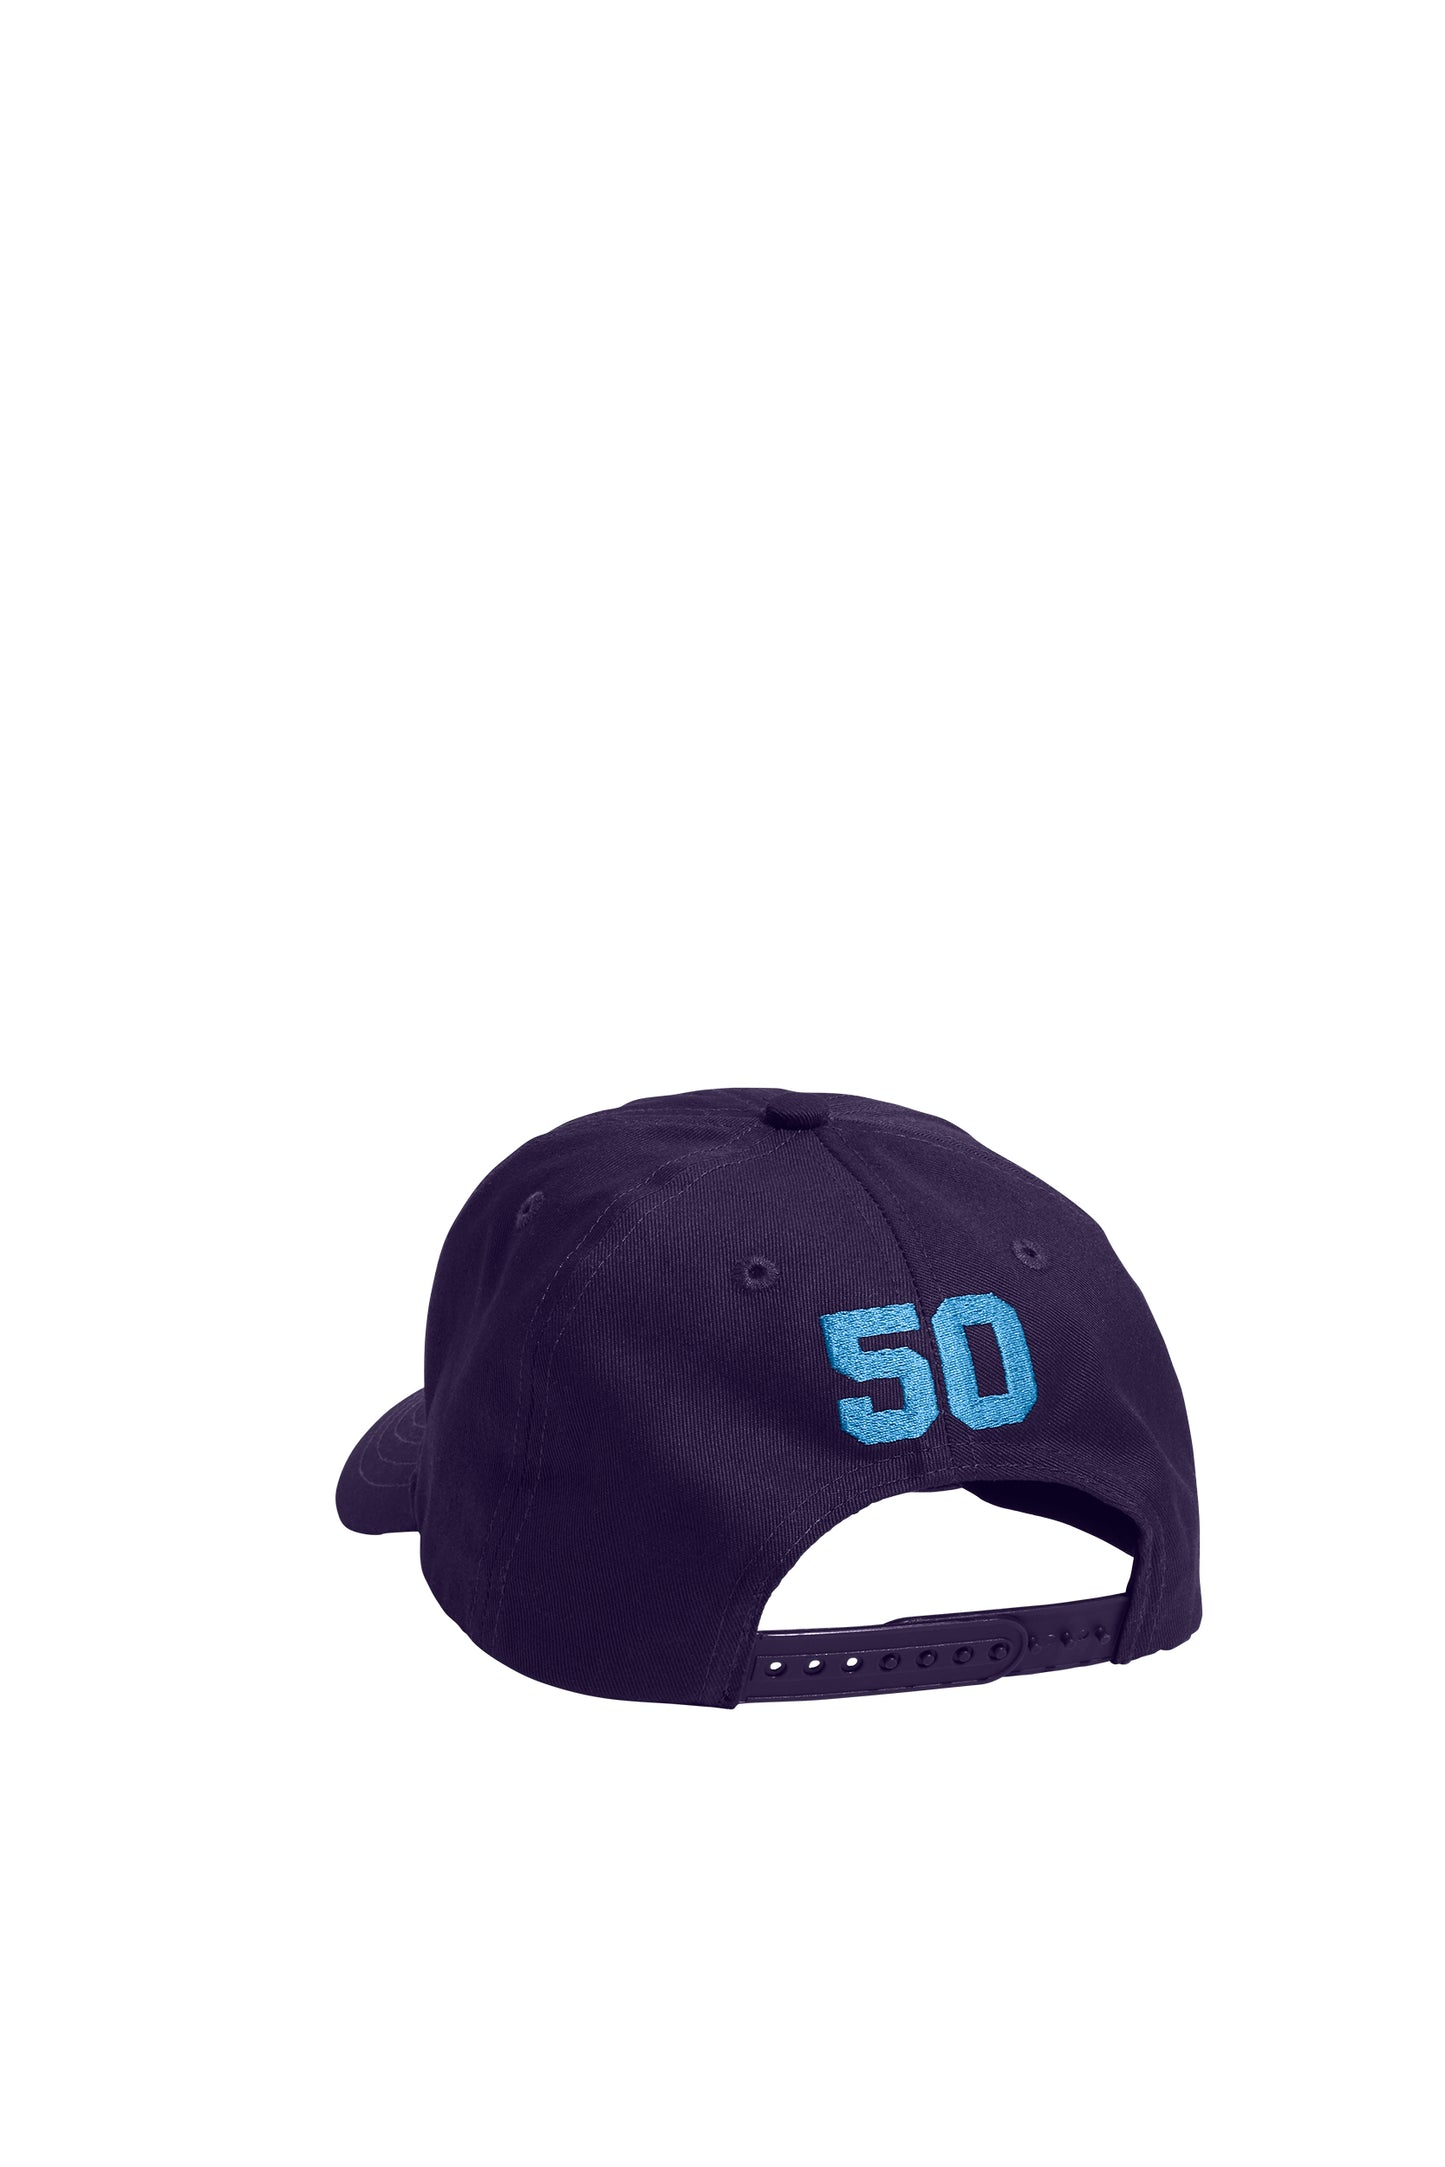 Purple/Blue Baseball Hat